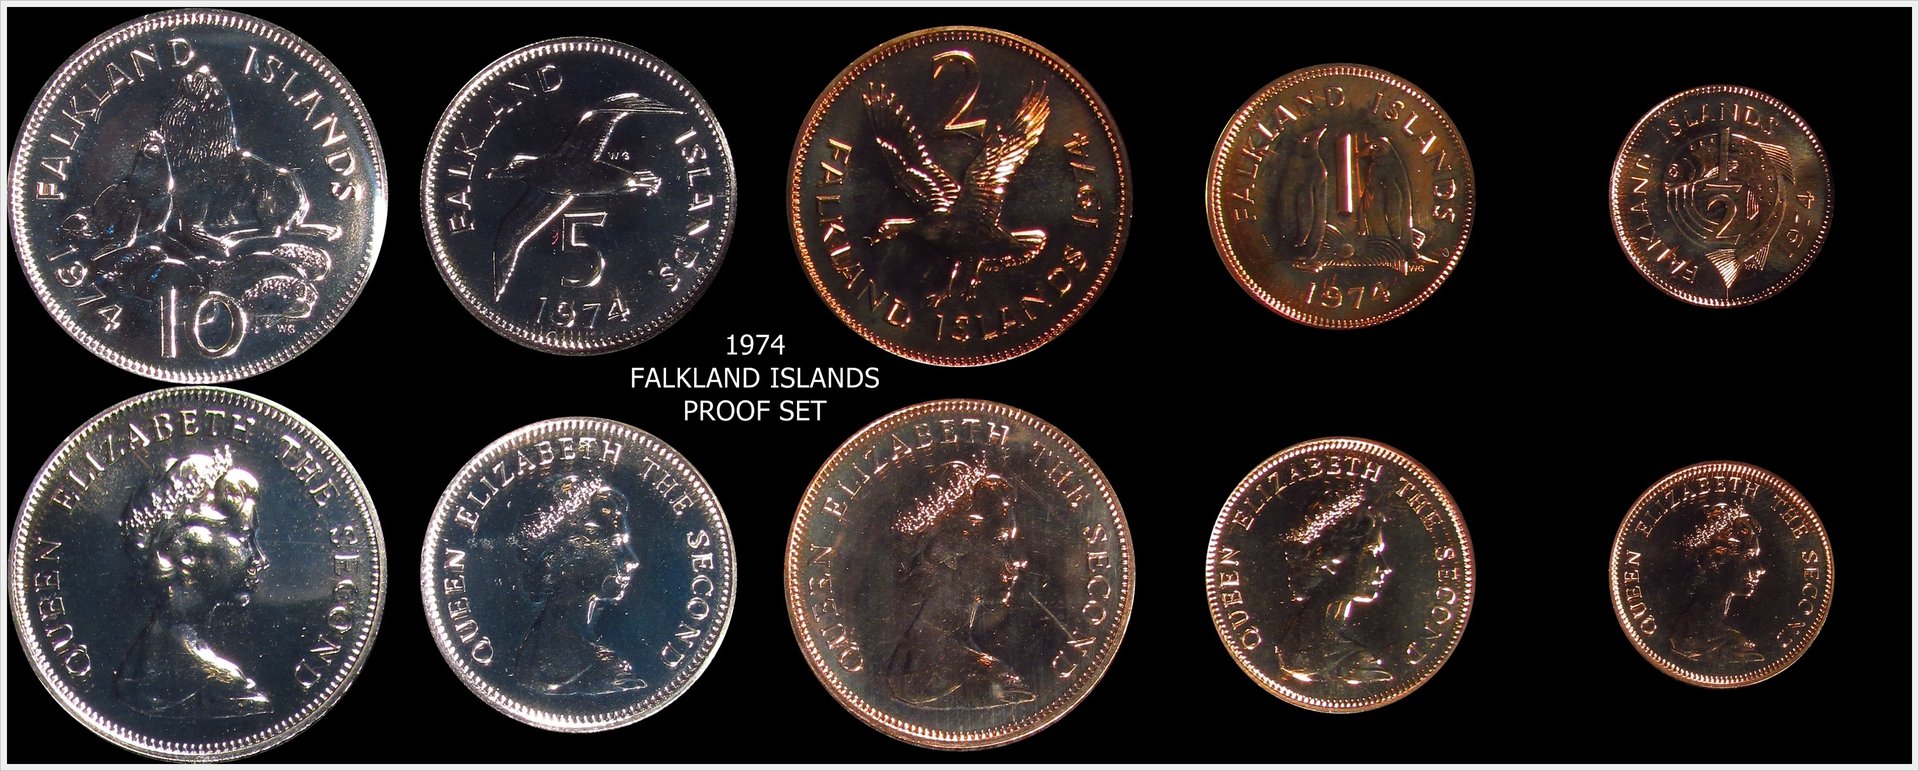 1974 Falkland Islands proof set.jpg